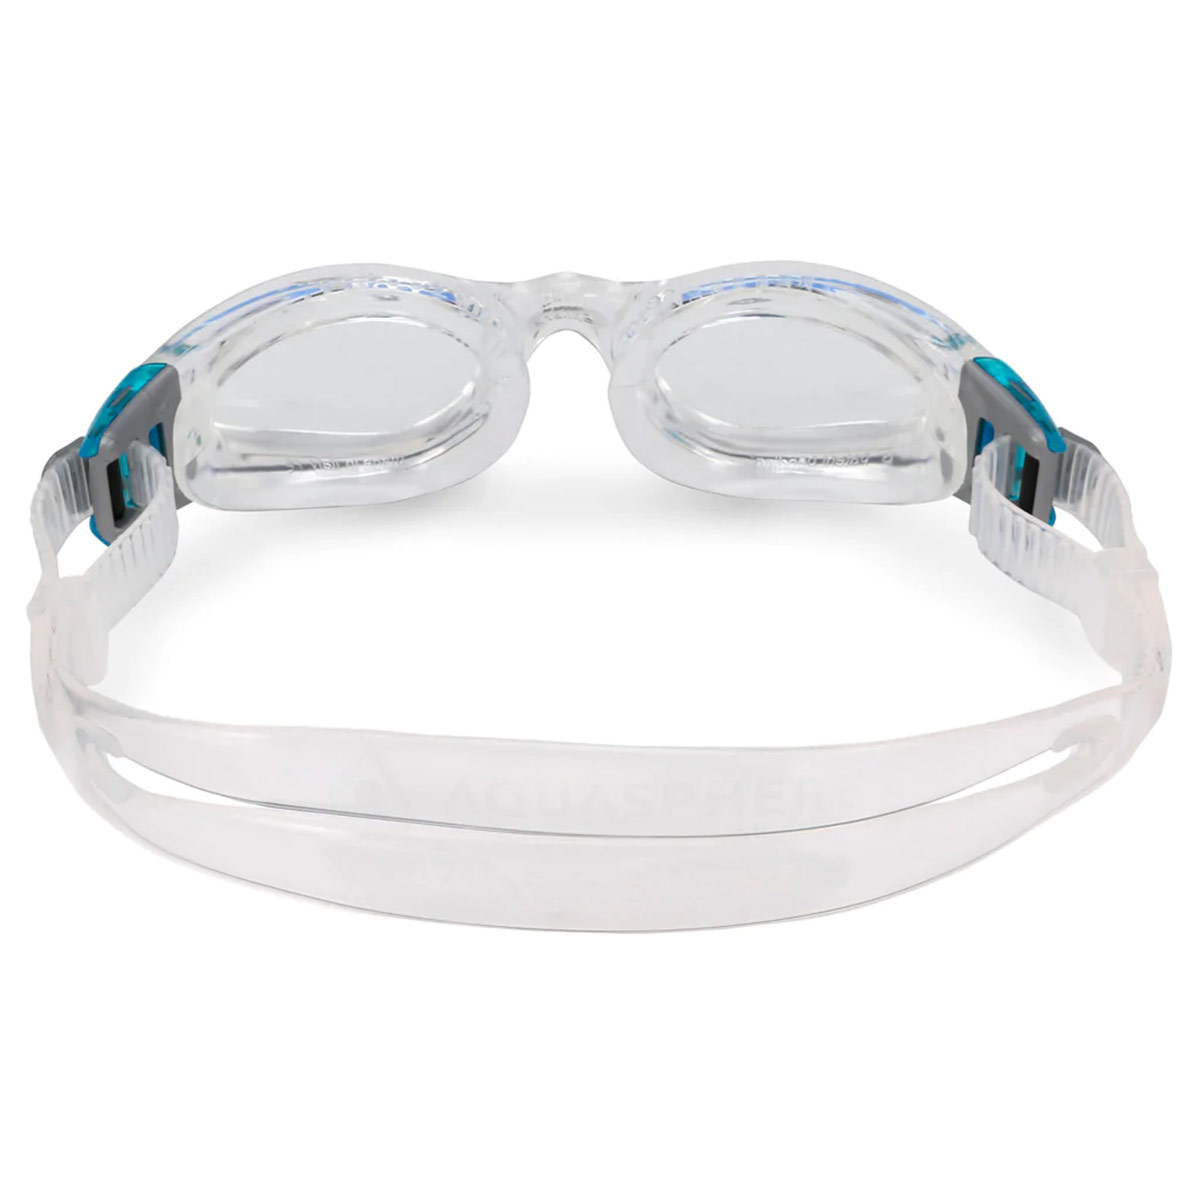 Aqua Sphere Kaiman Compact očala s prozornimi lečami - prozorna/modra